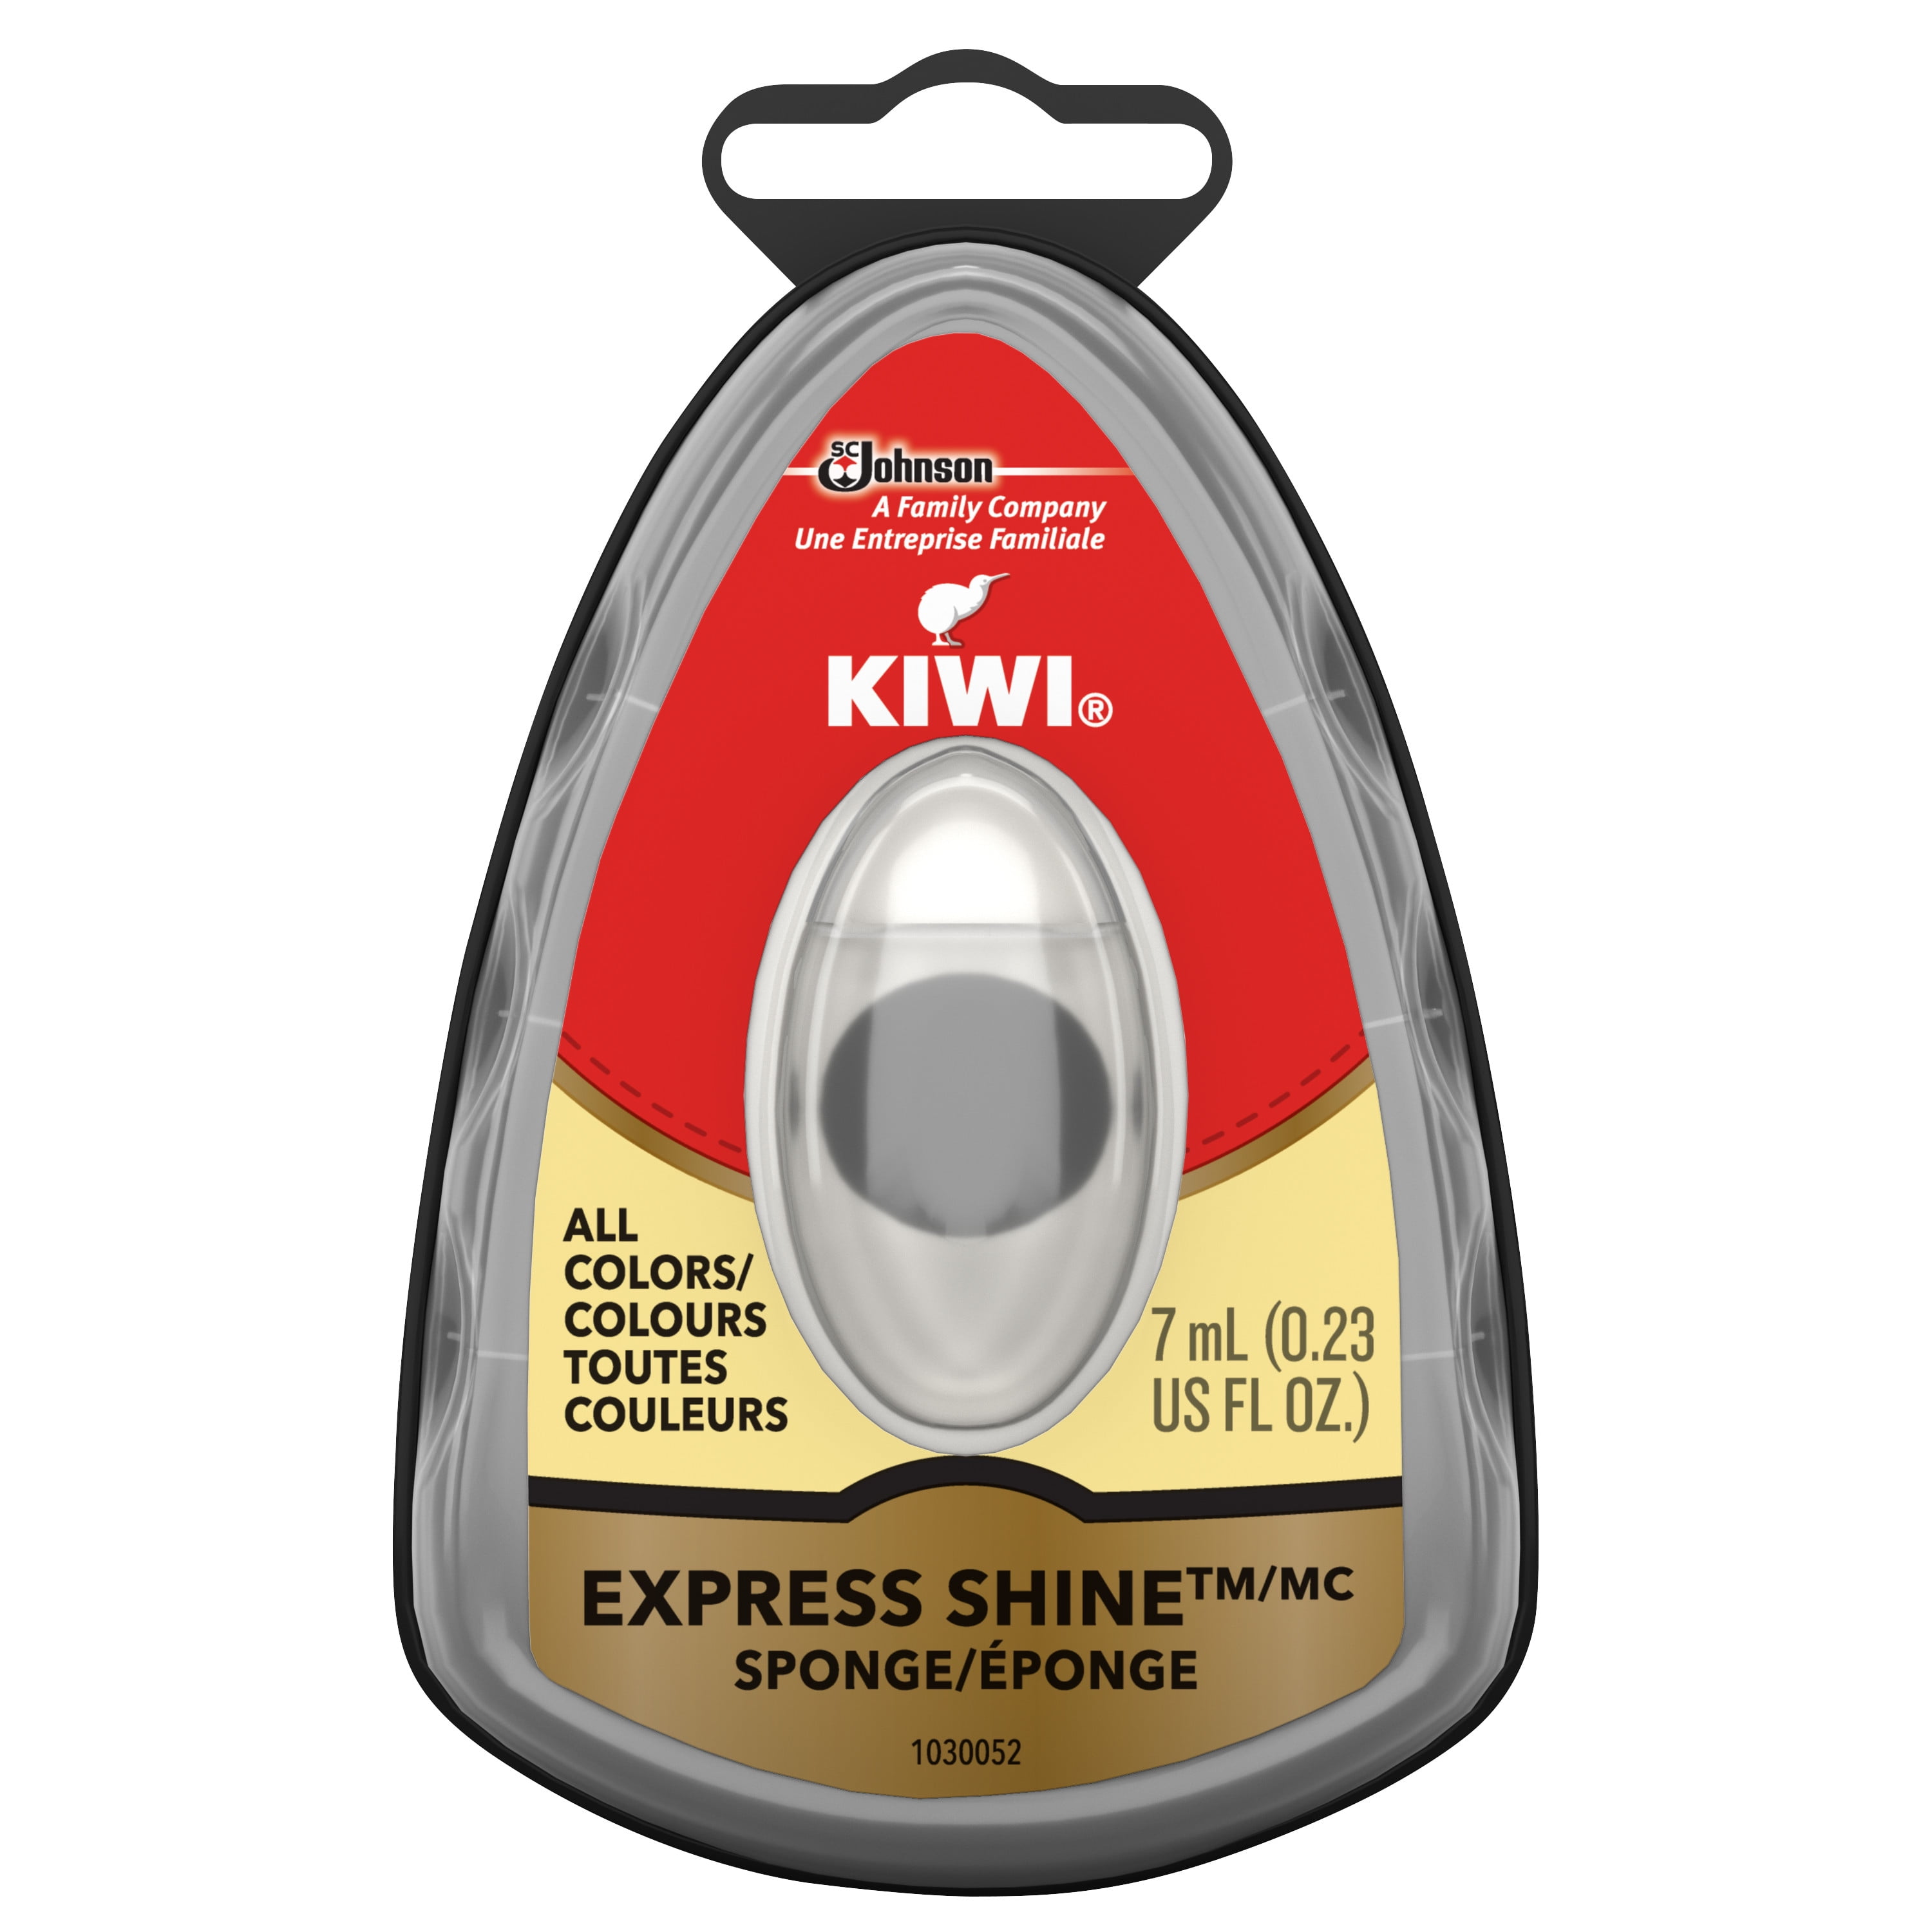 kiwi liquid shoe polish neutral